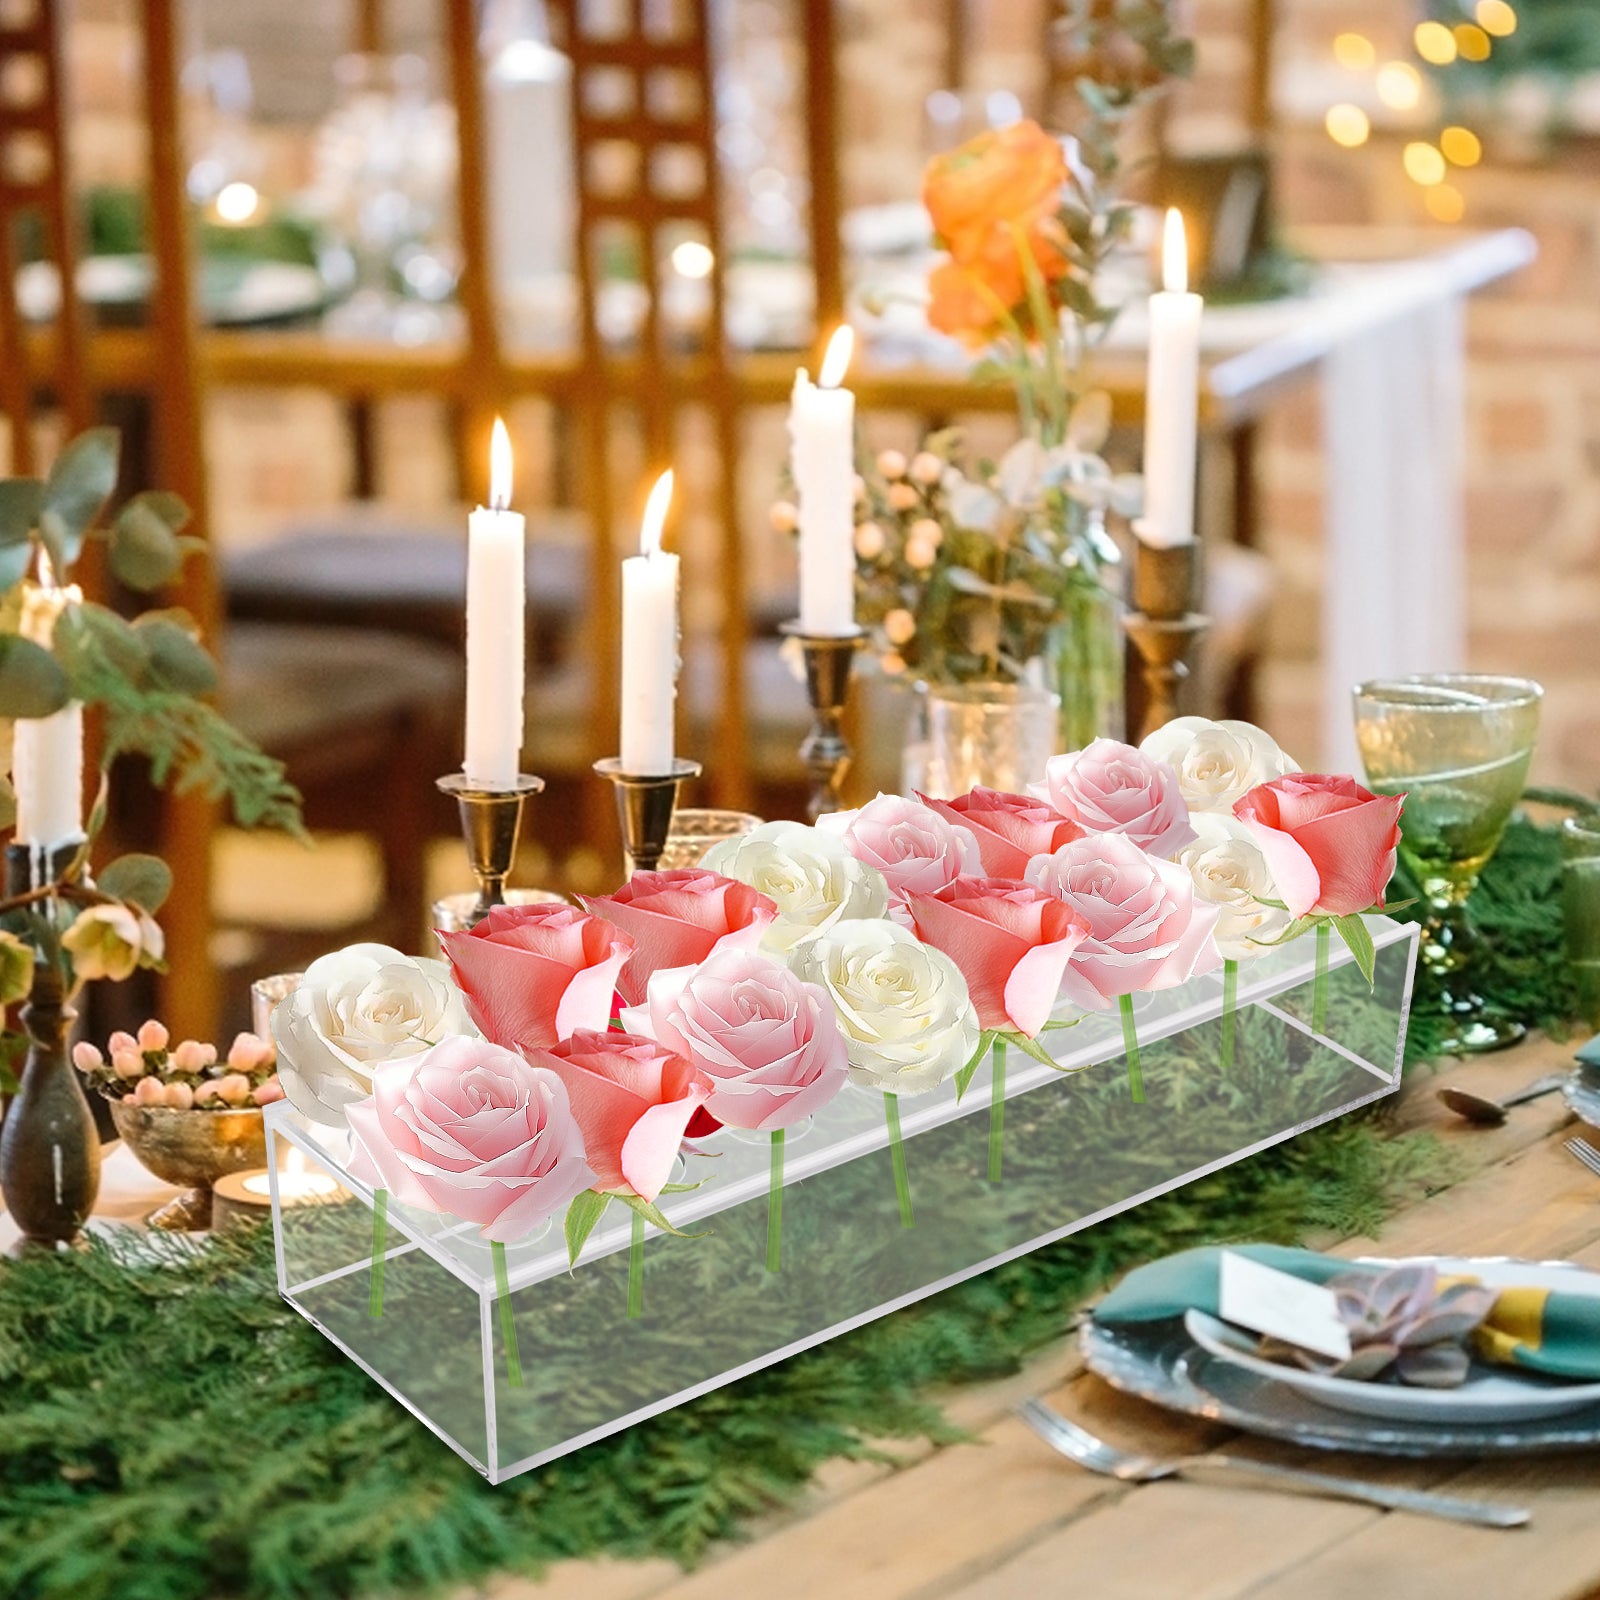 Clear Acrylic Flower Vase, Rectangular Floral Centerpiece, Rectangle Acrylic Vase for Home Wedding Dining Table Decor